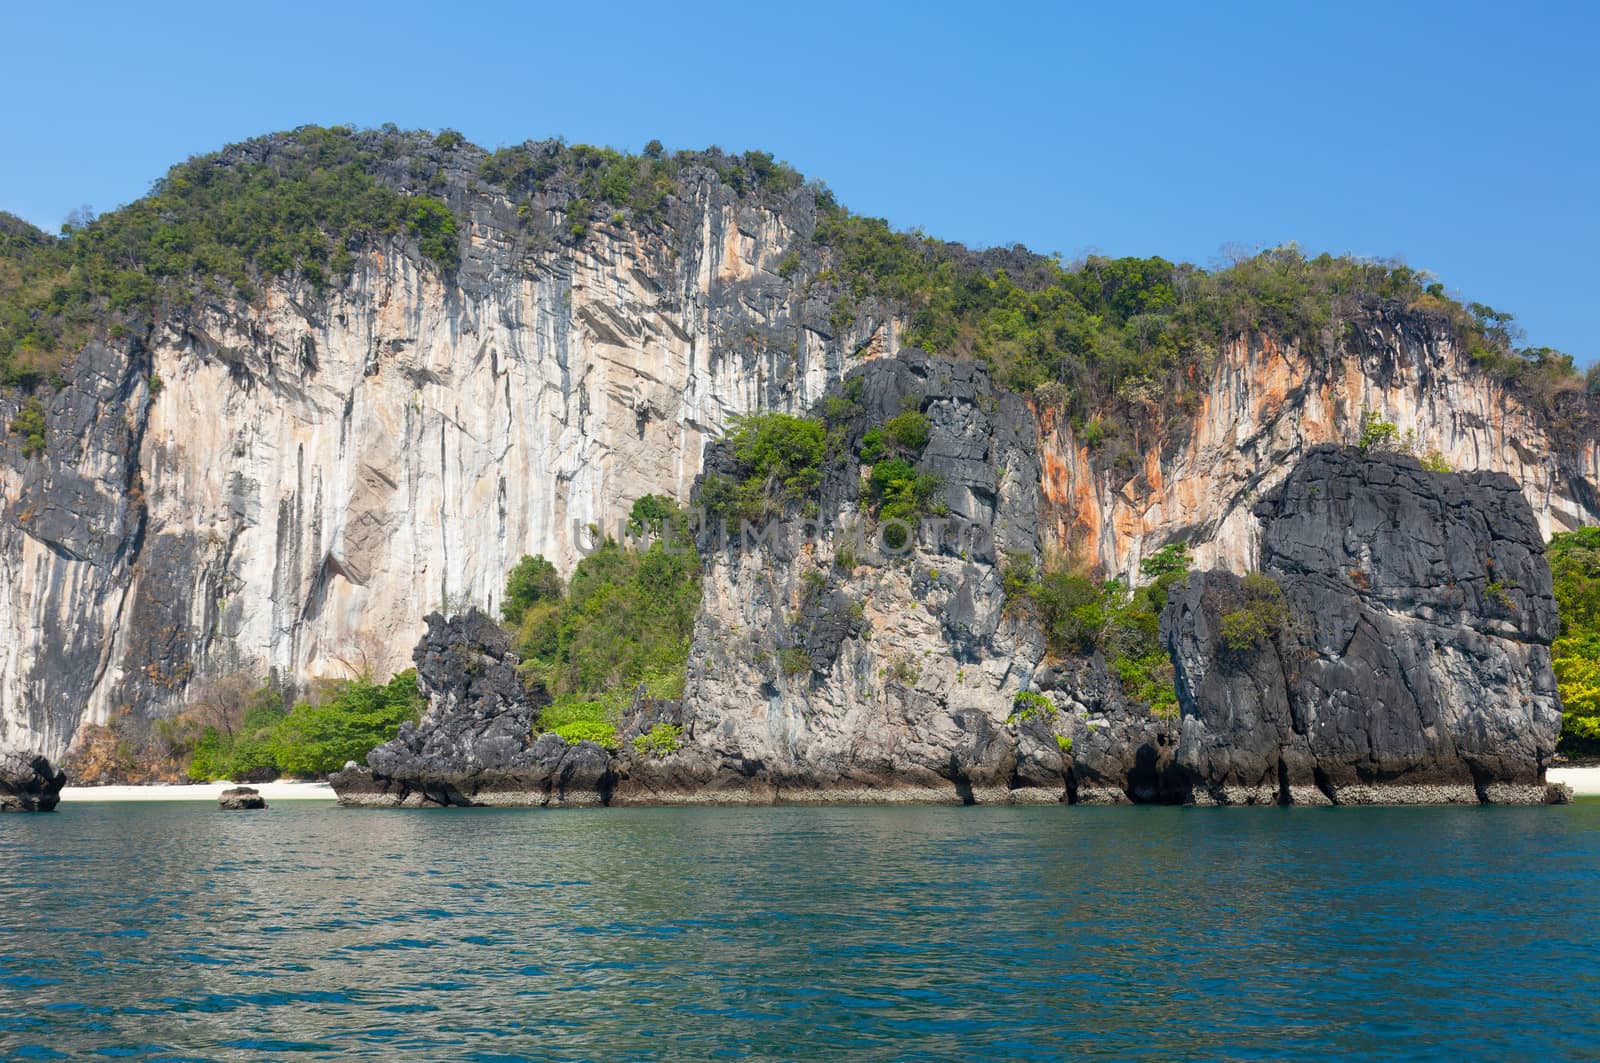 Beautiful rocks of the island Hong in the Andaman Sea, Thailand by elena_shchipkova